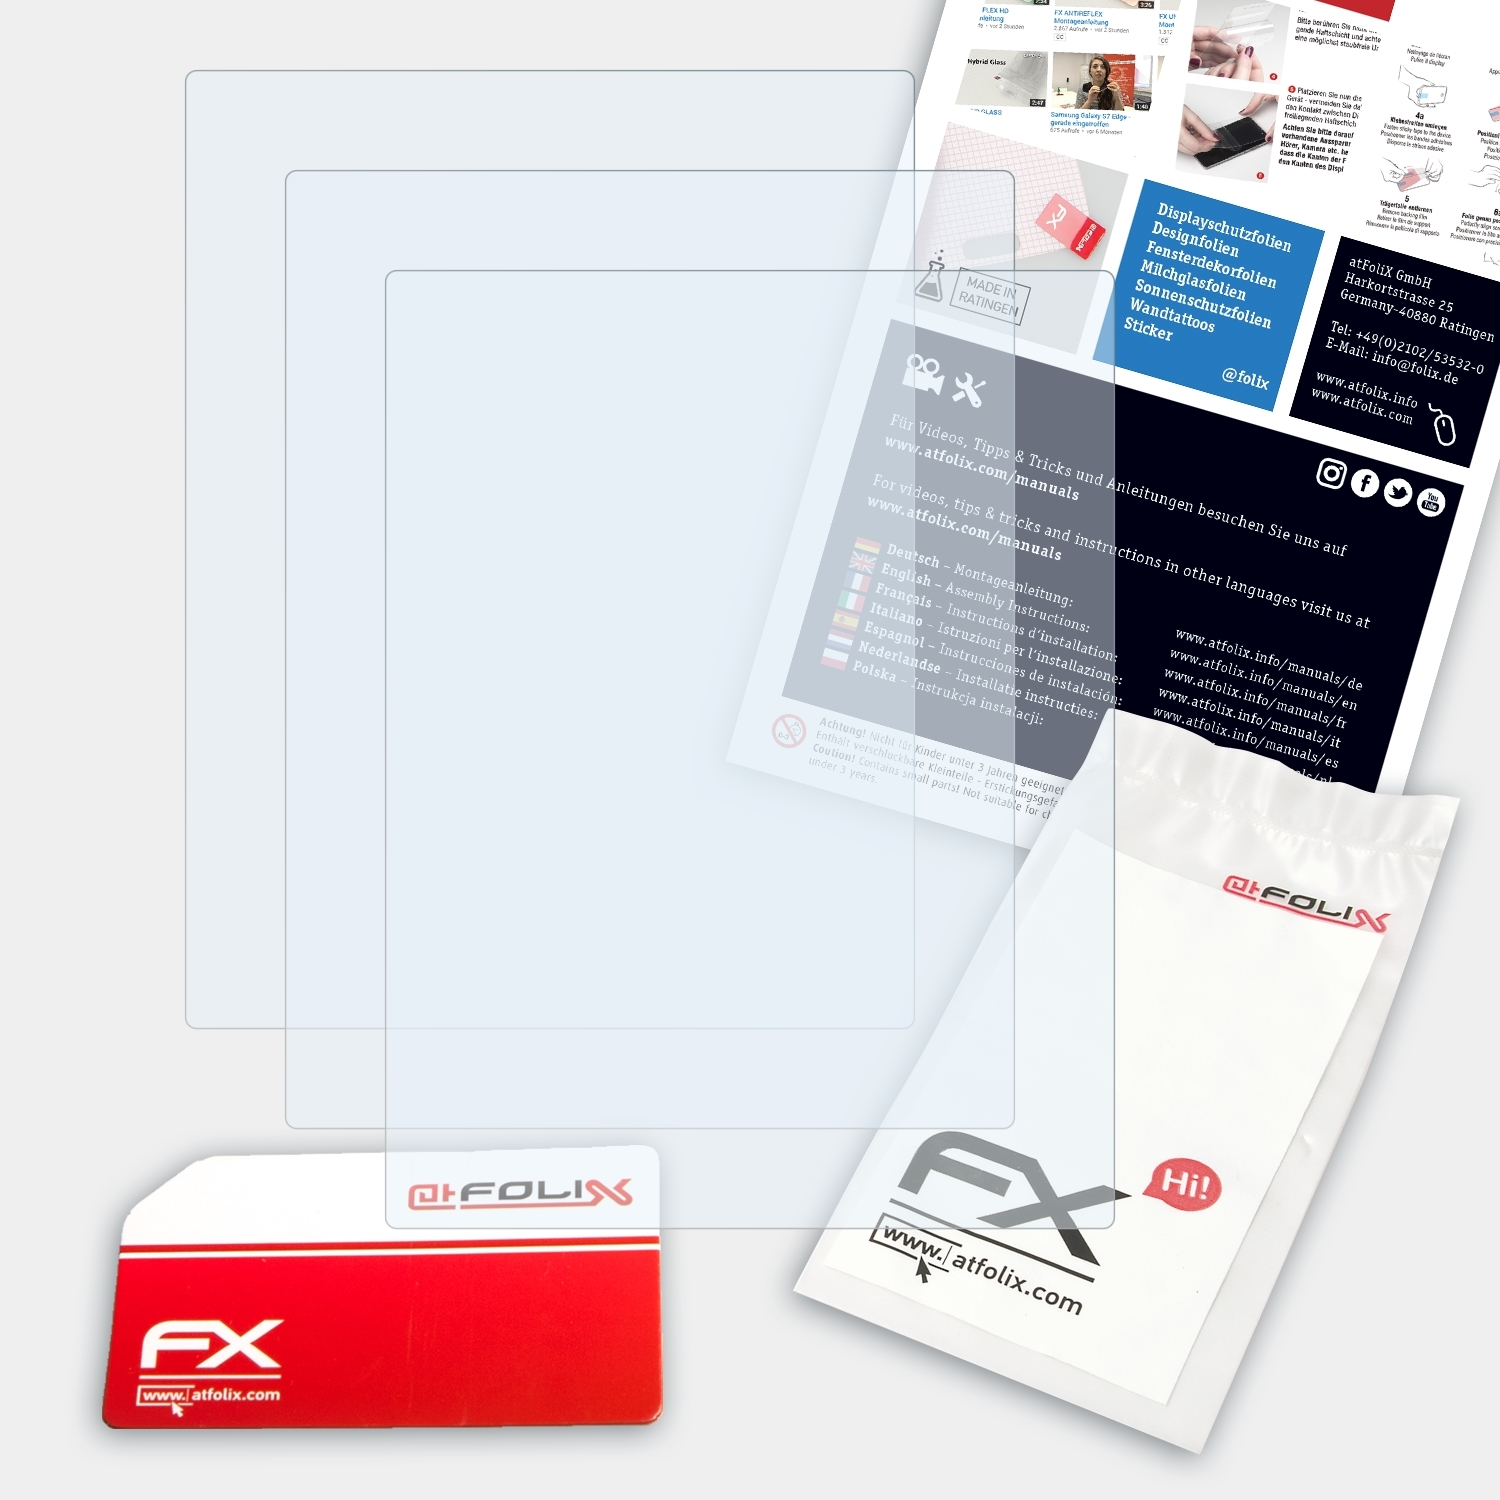 FX-Clear ATFOLIX iPaq Displayschutz(für 3x HP 214)